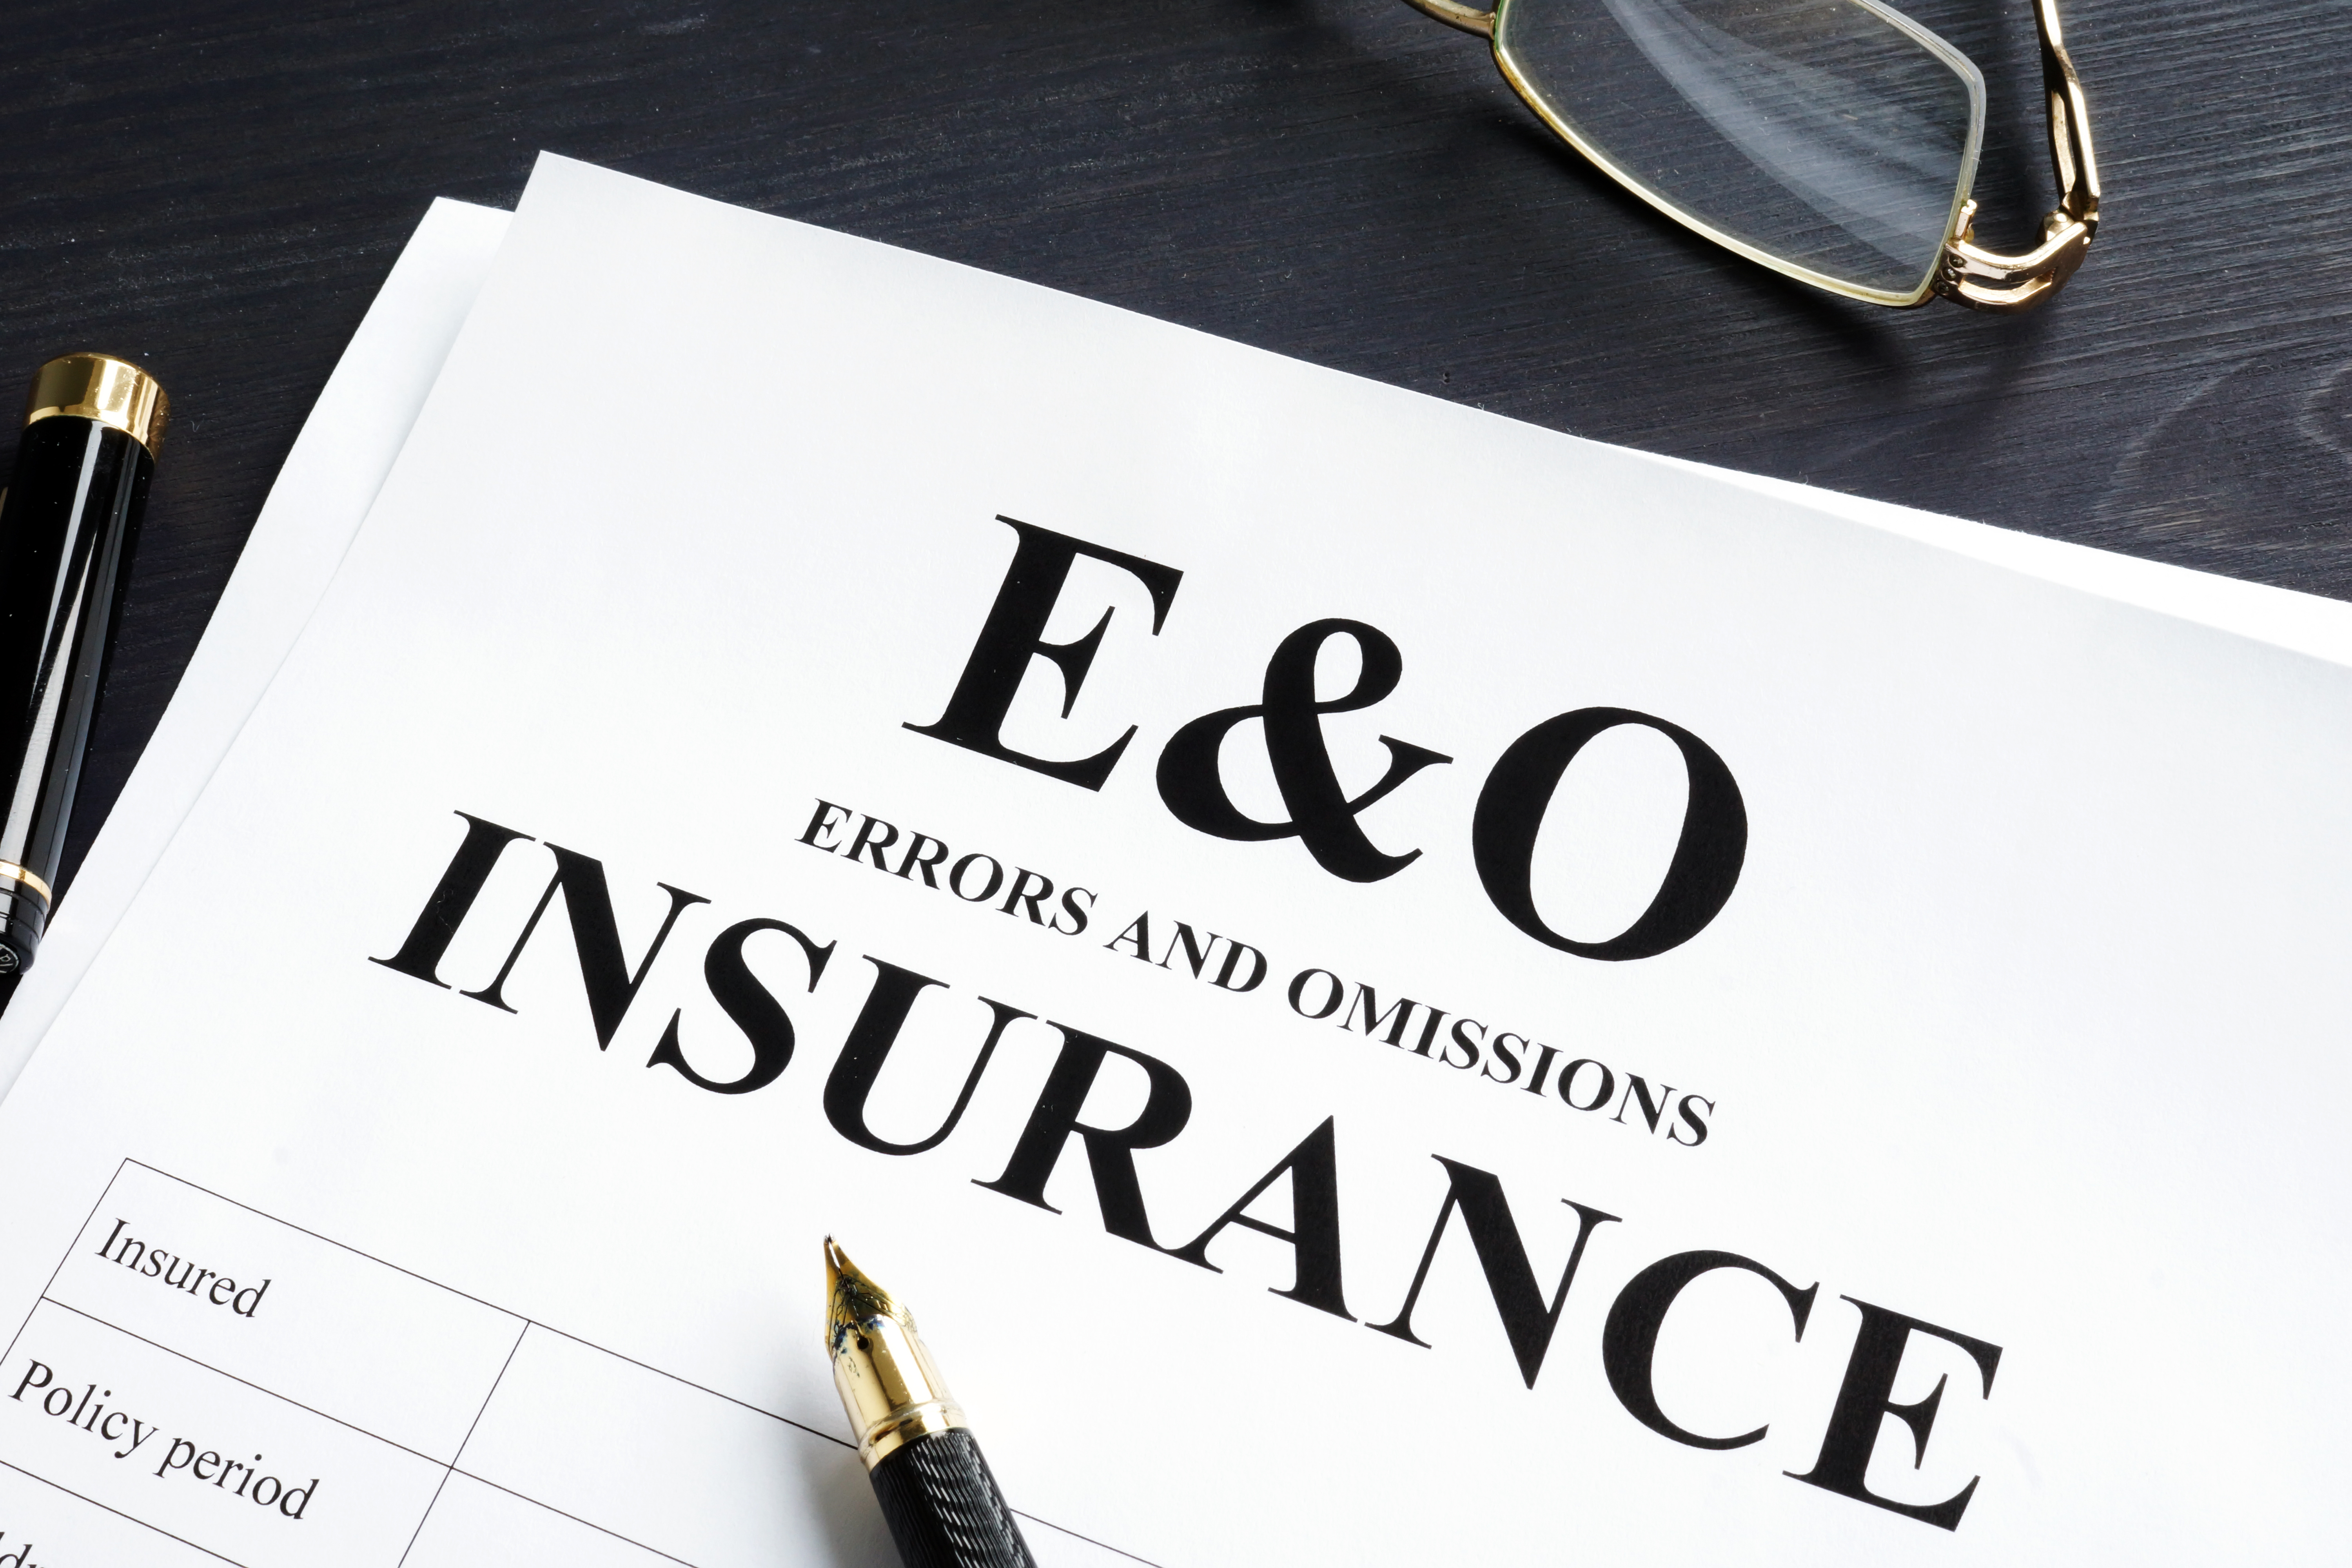 E&O insurance form with pen